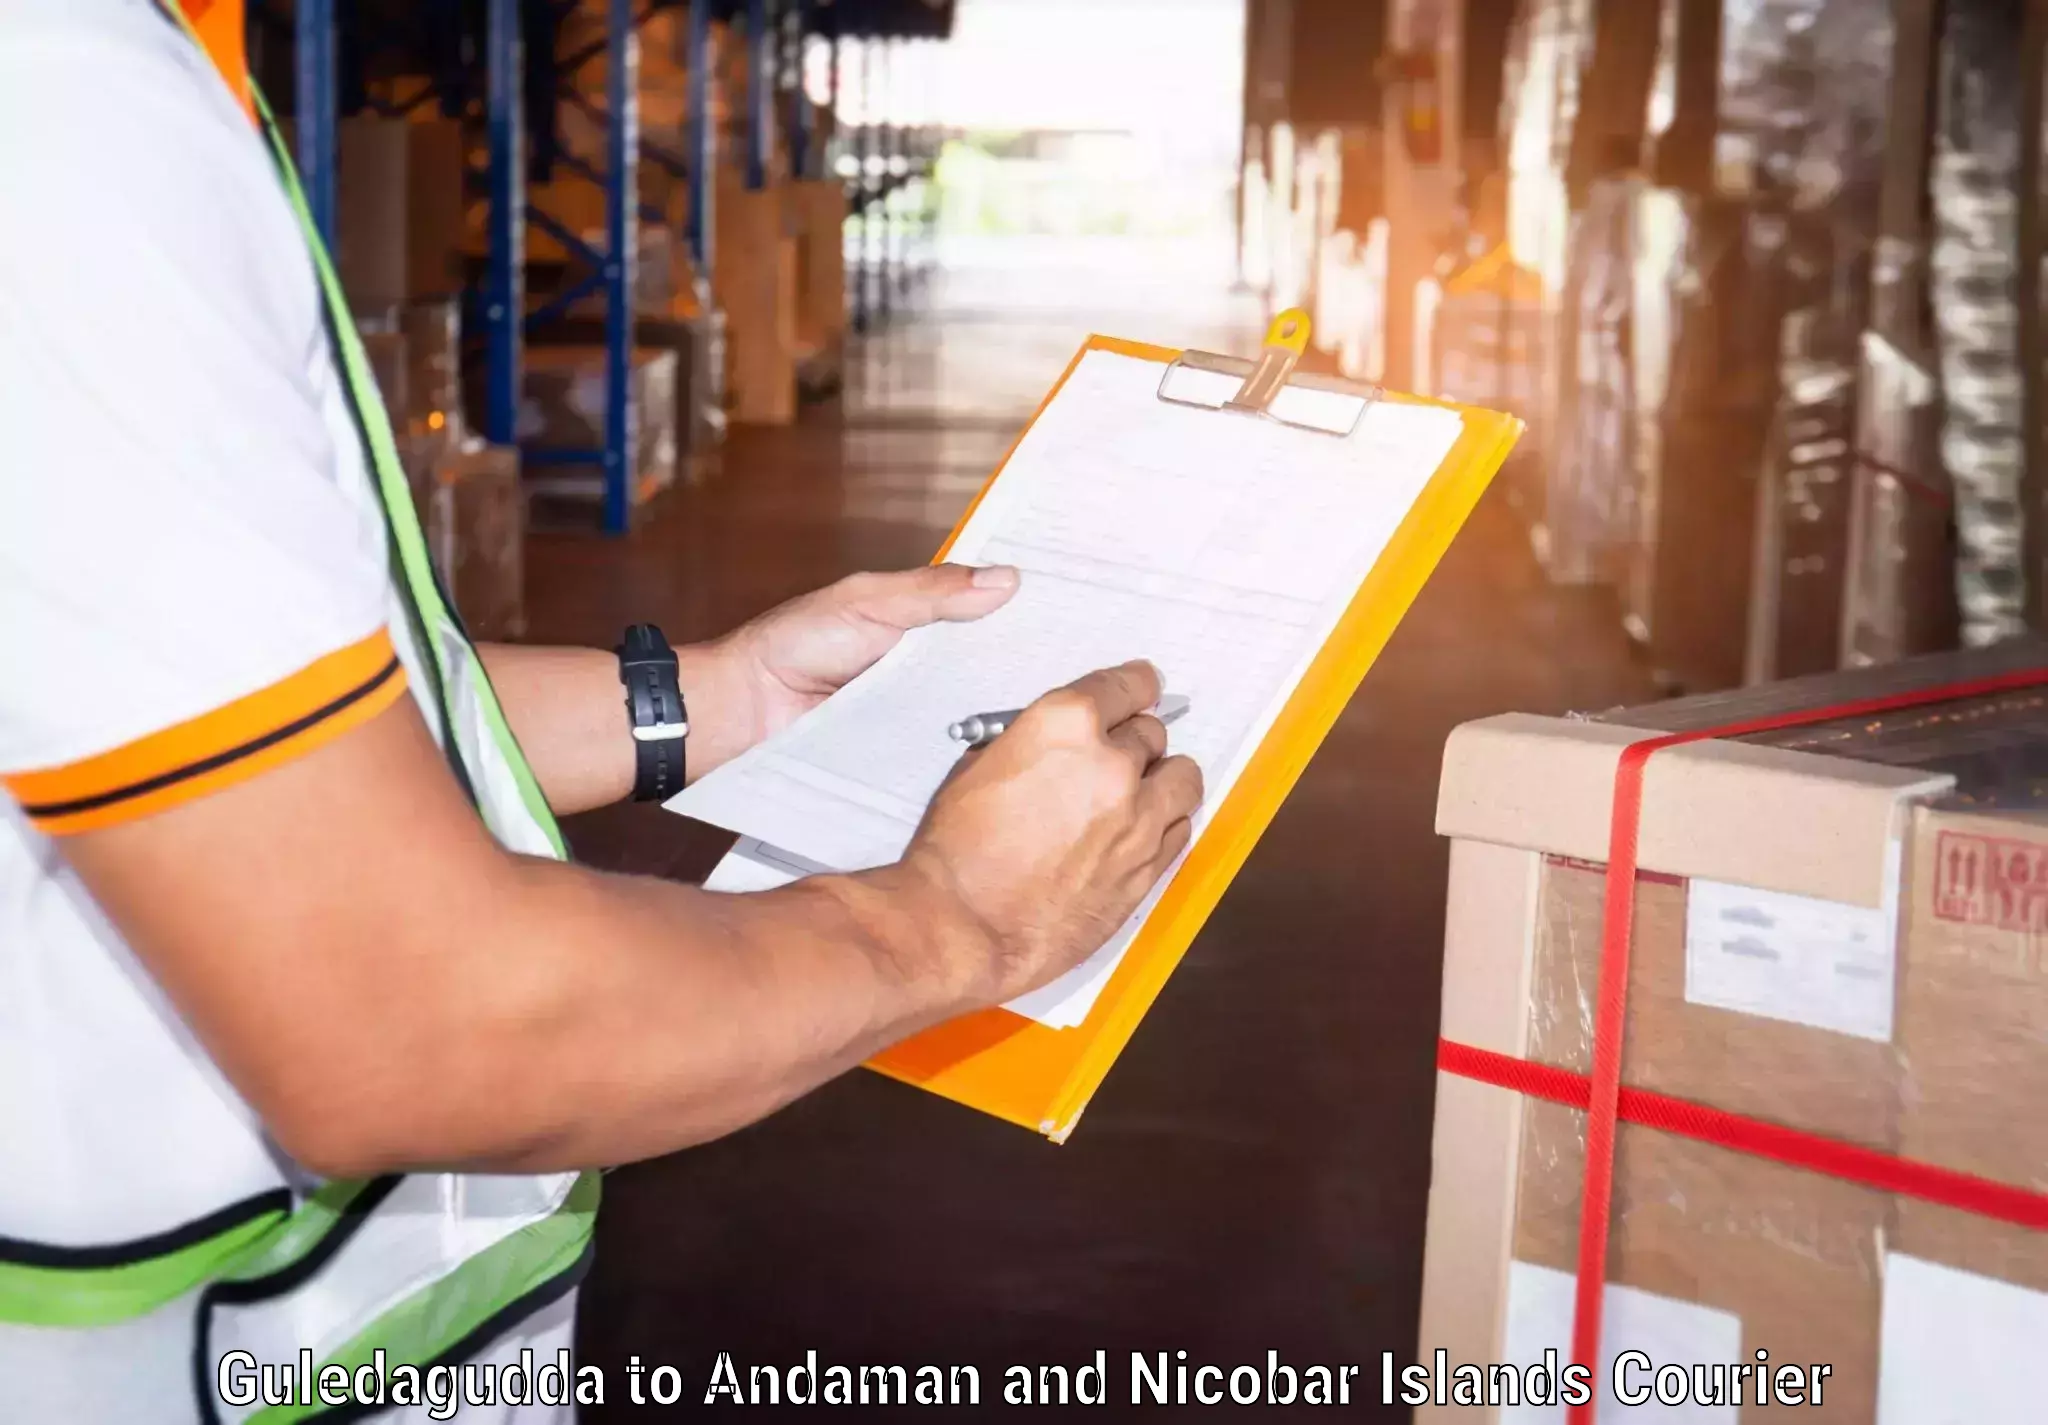 High-capacity parcel service Guledagudda to Nicobar